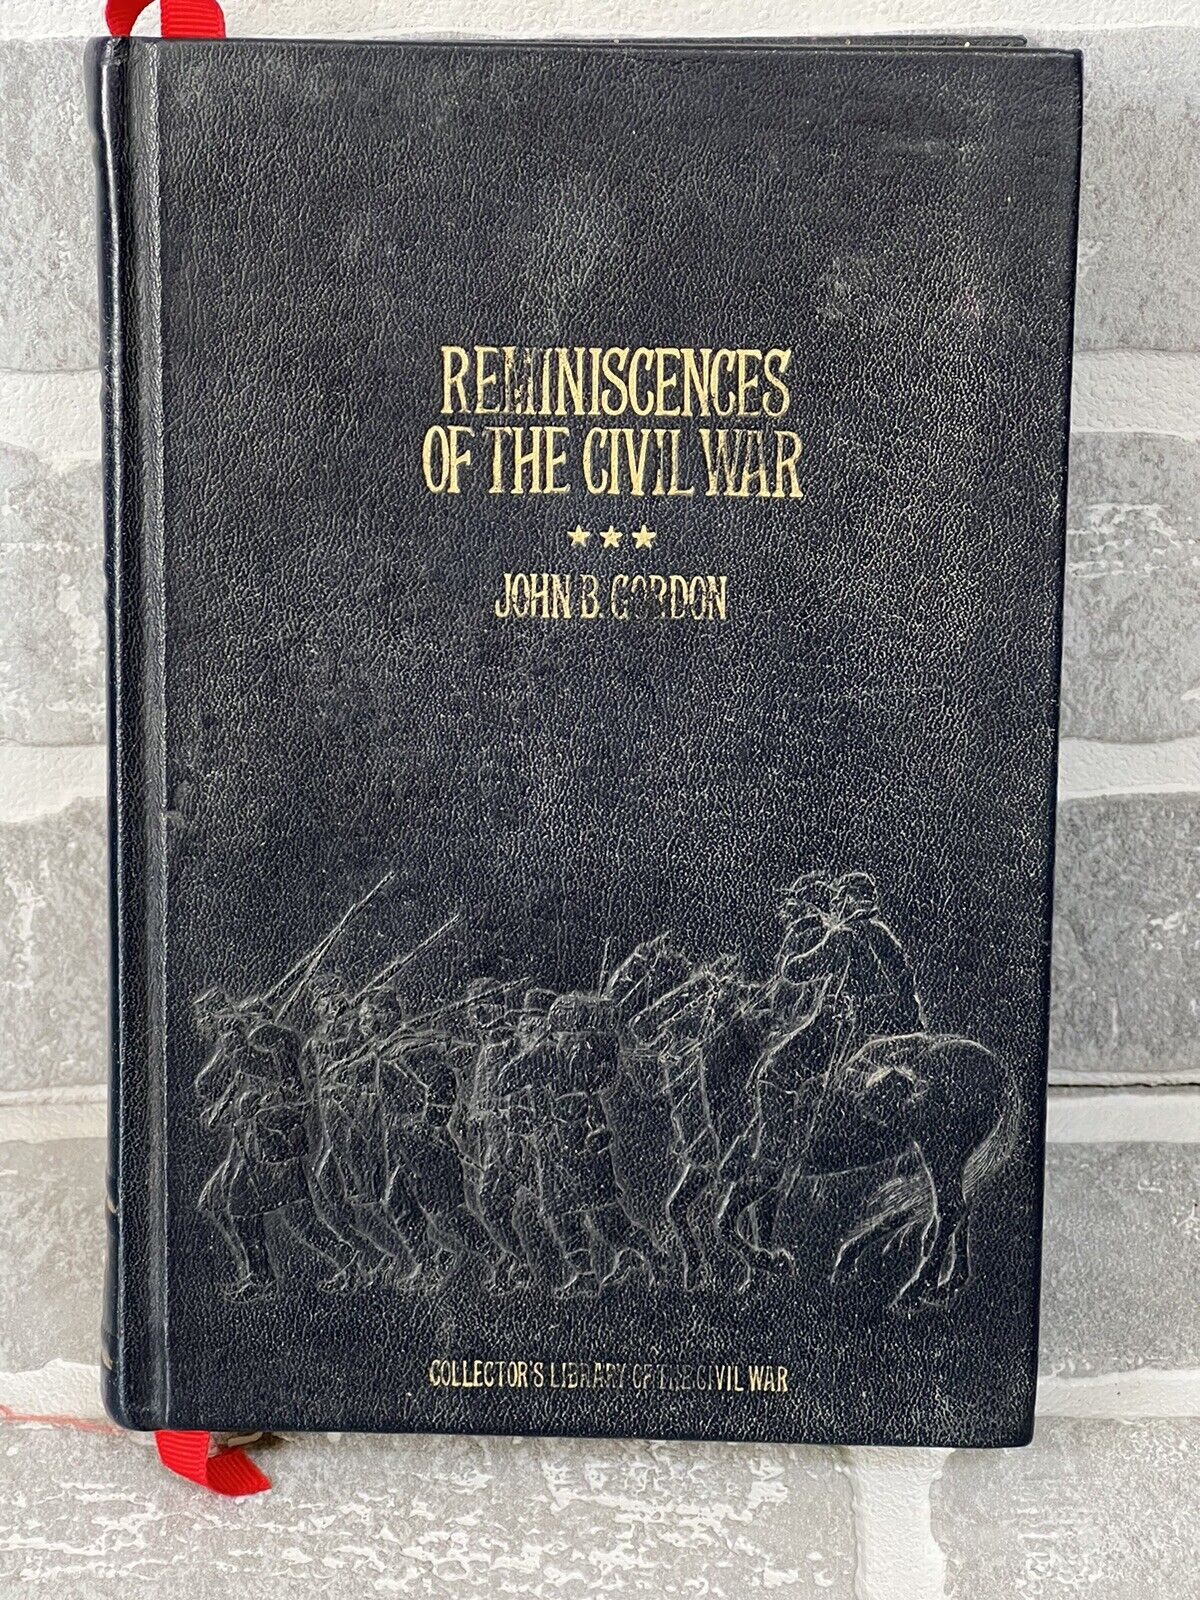 Reminiscences Of The Civil War By John B. Gordon 1981 Hardcover Edition Book